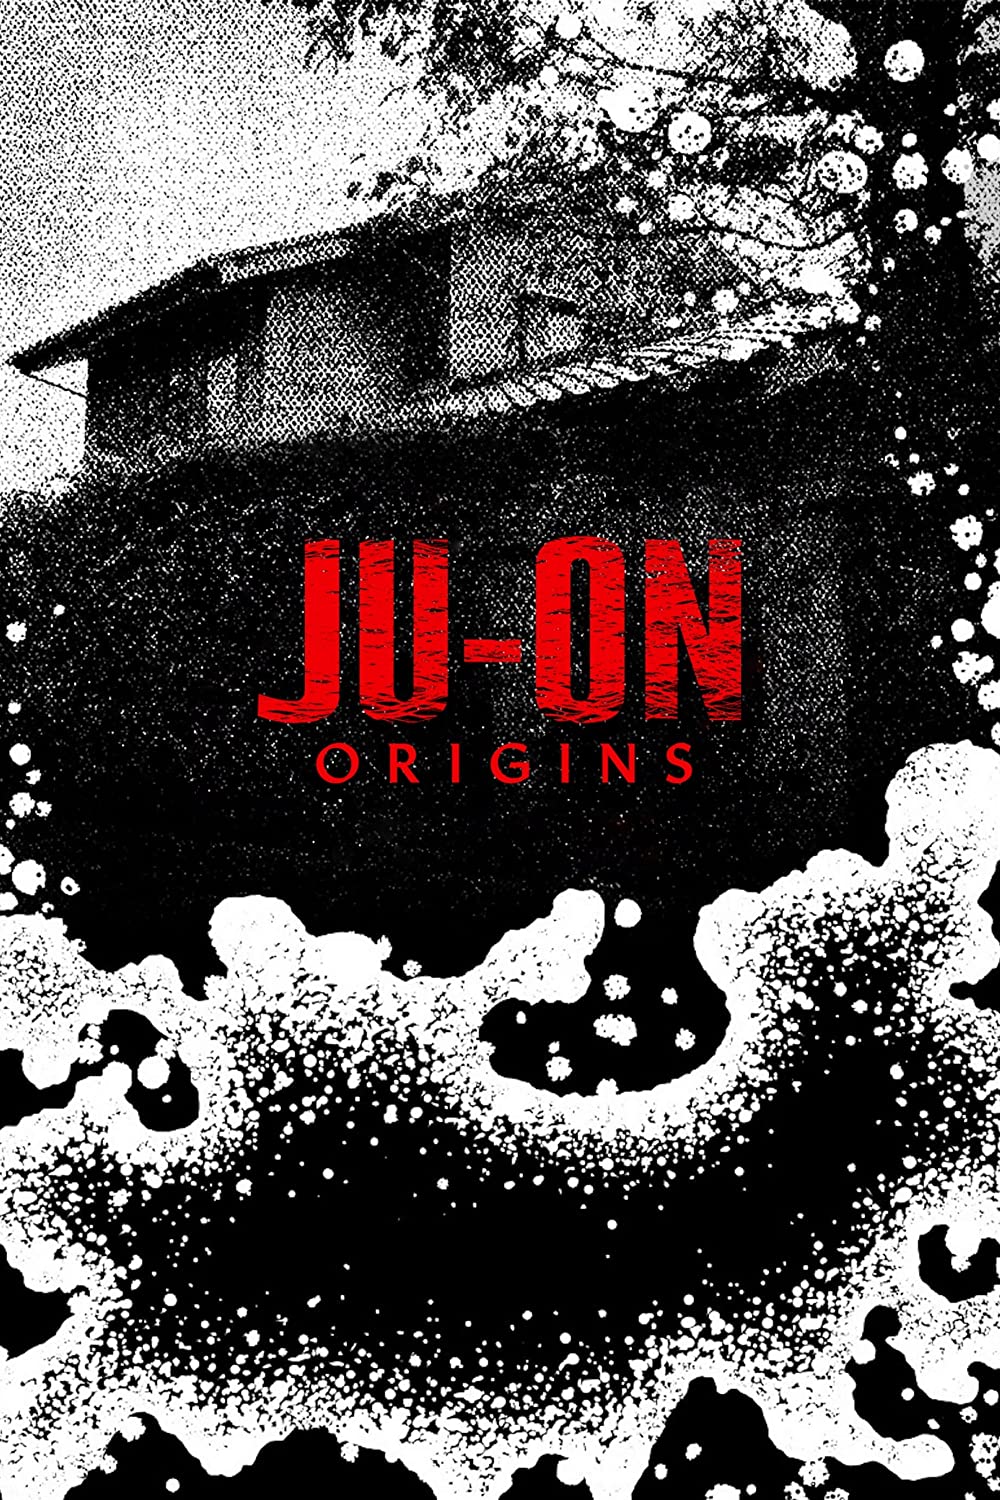 Filmbeschreibung zu Ju-on: Origins